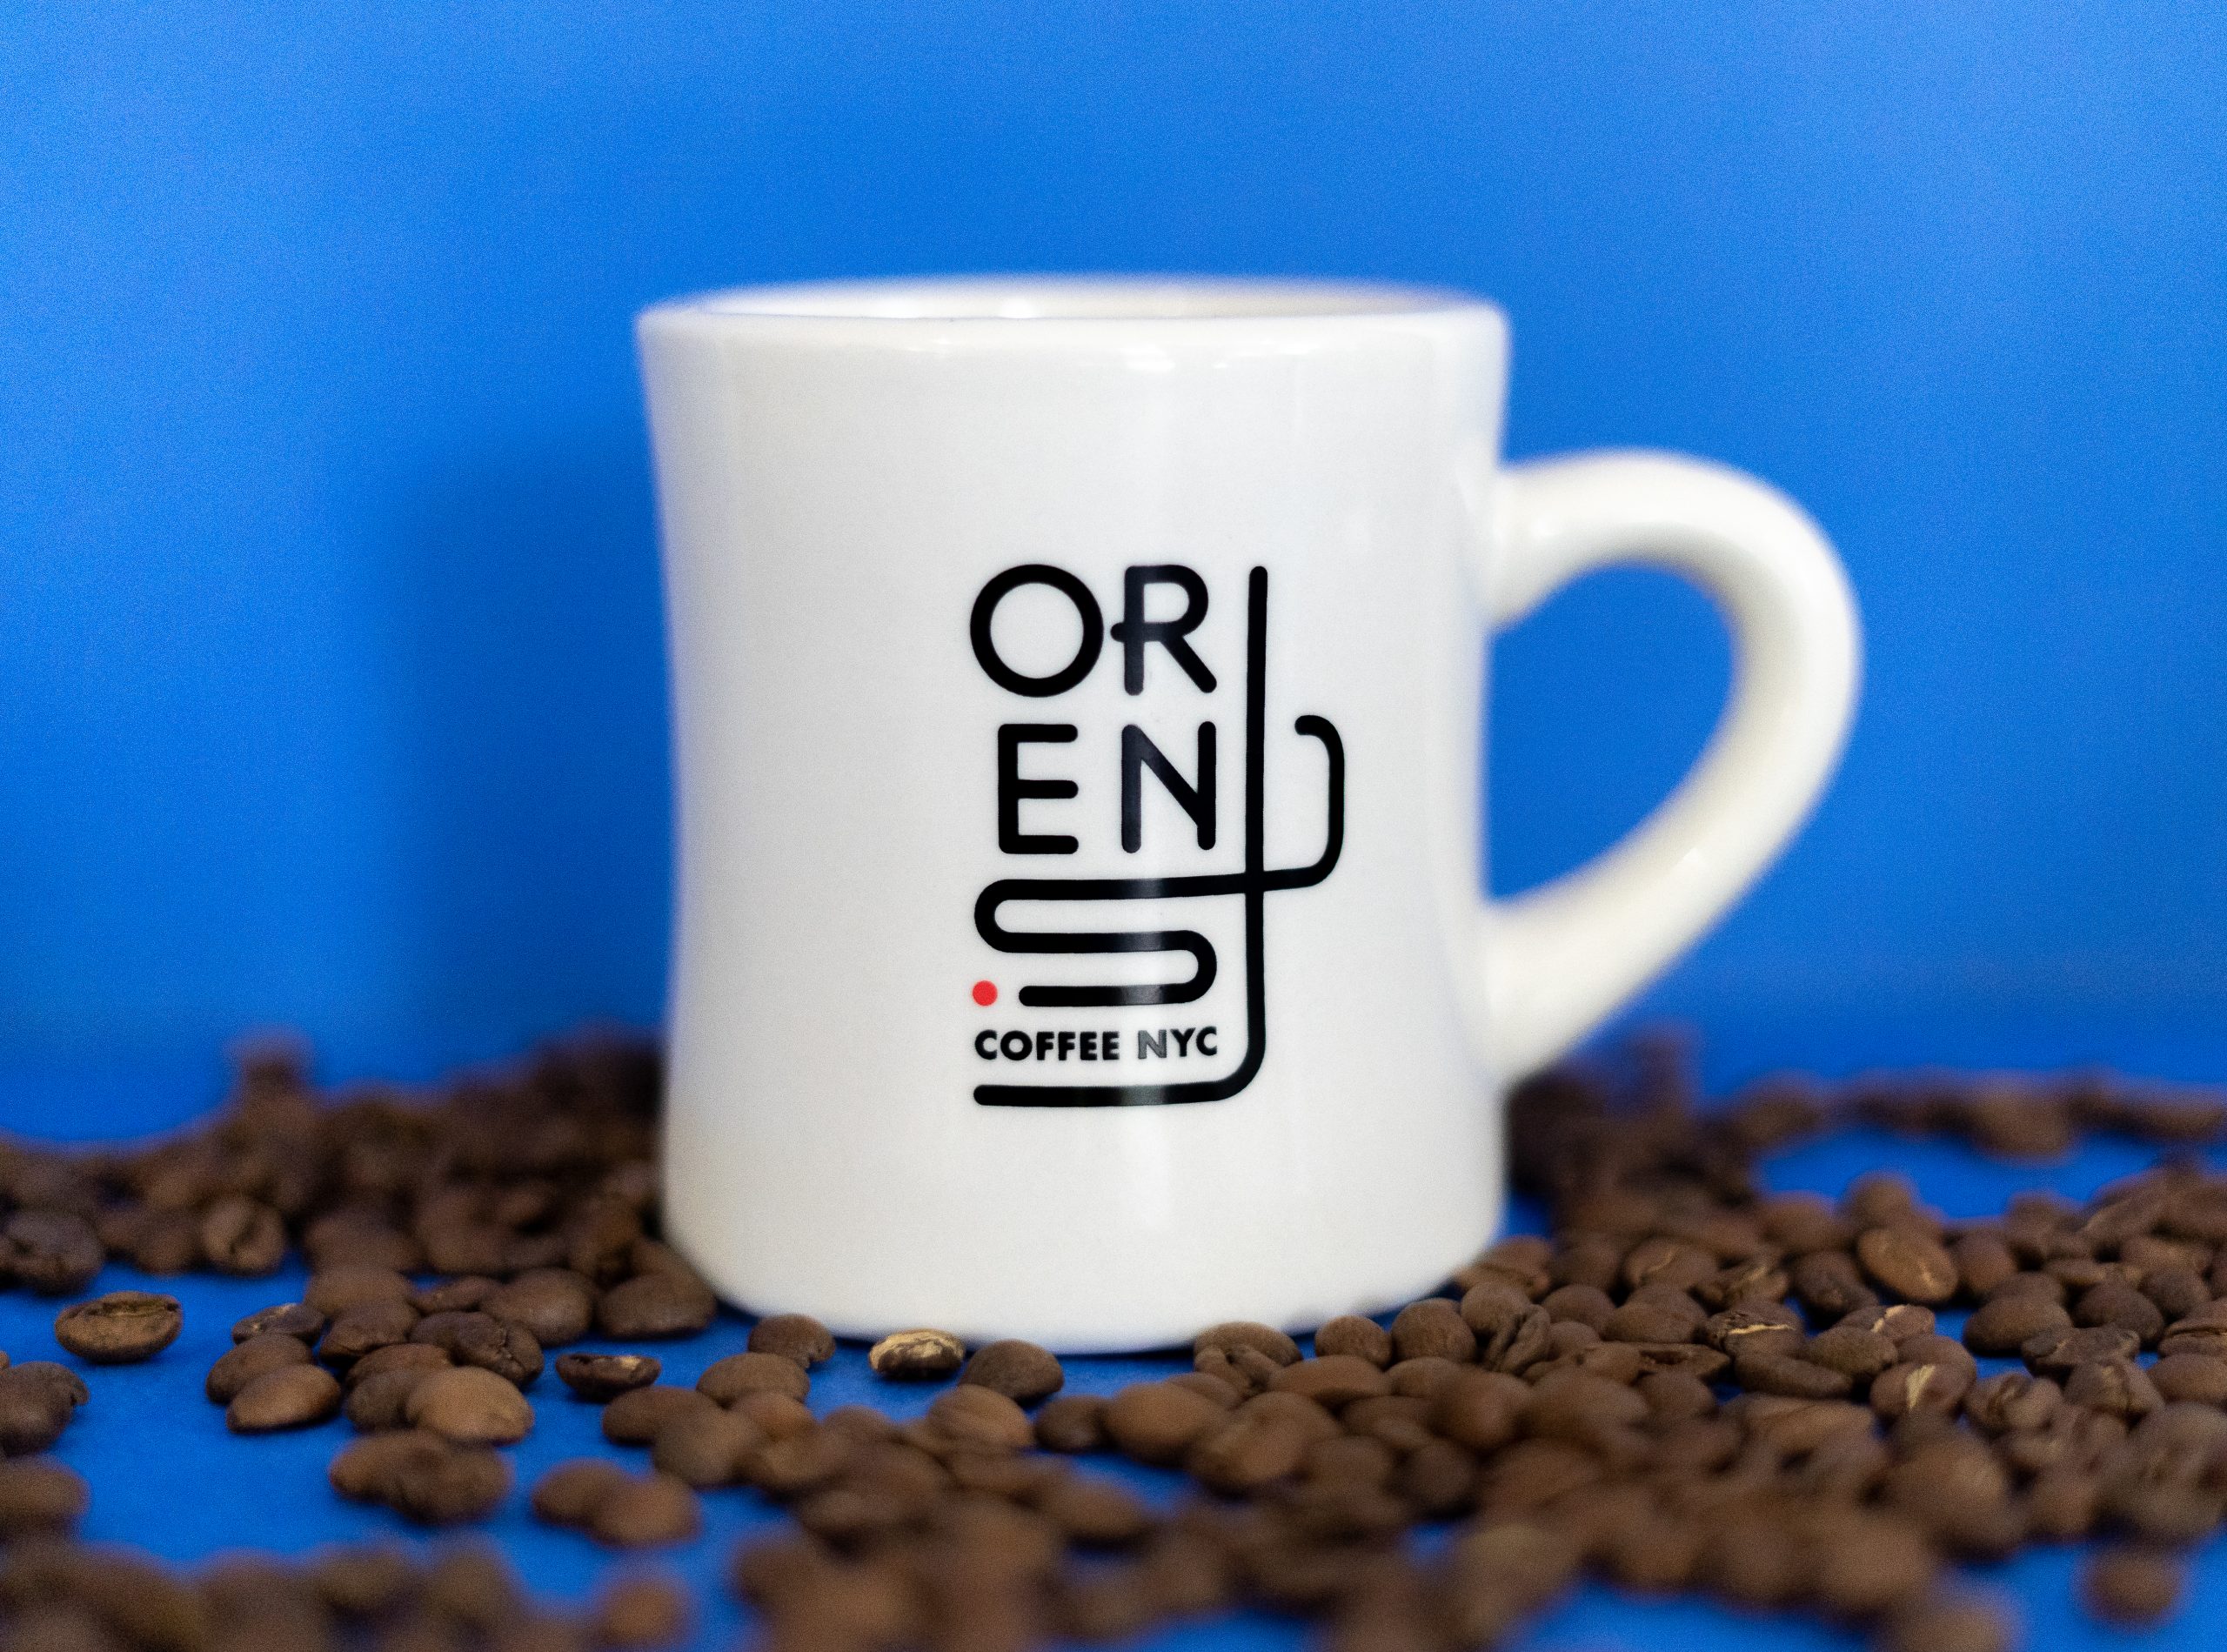 Oren's Coffee NYC